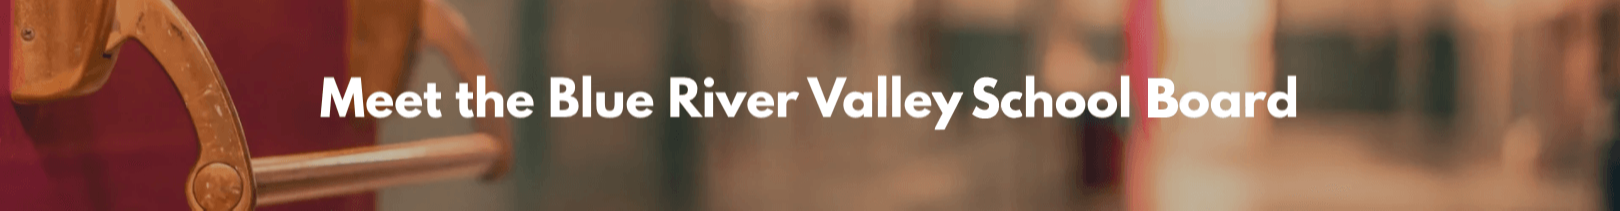 Meet the Blue River Valley School Board